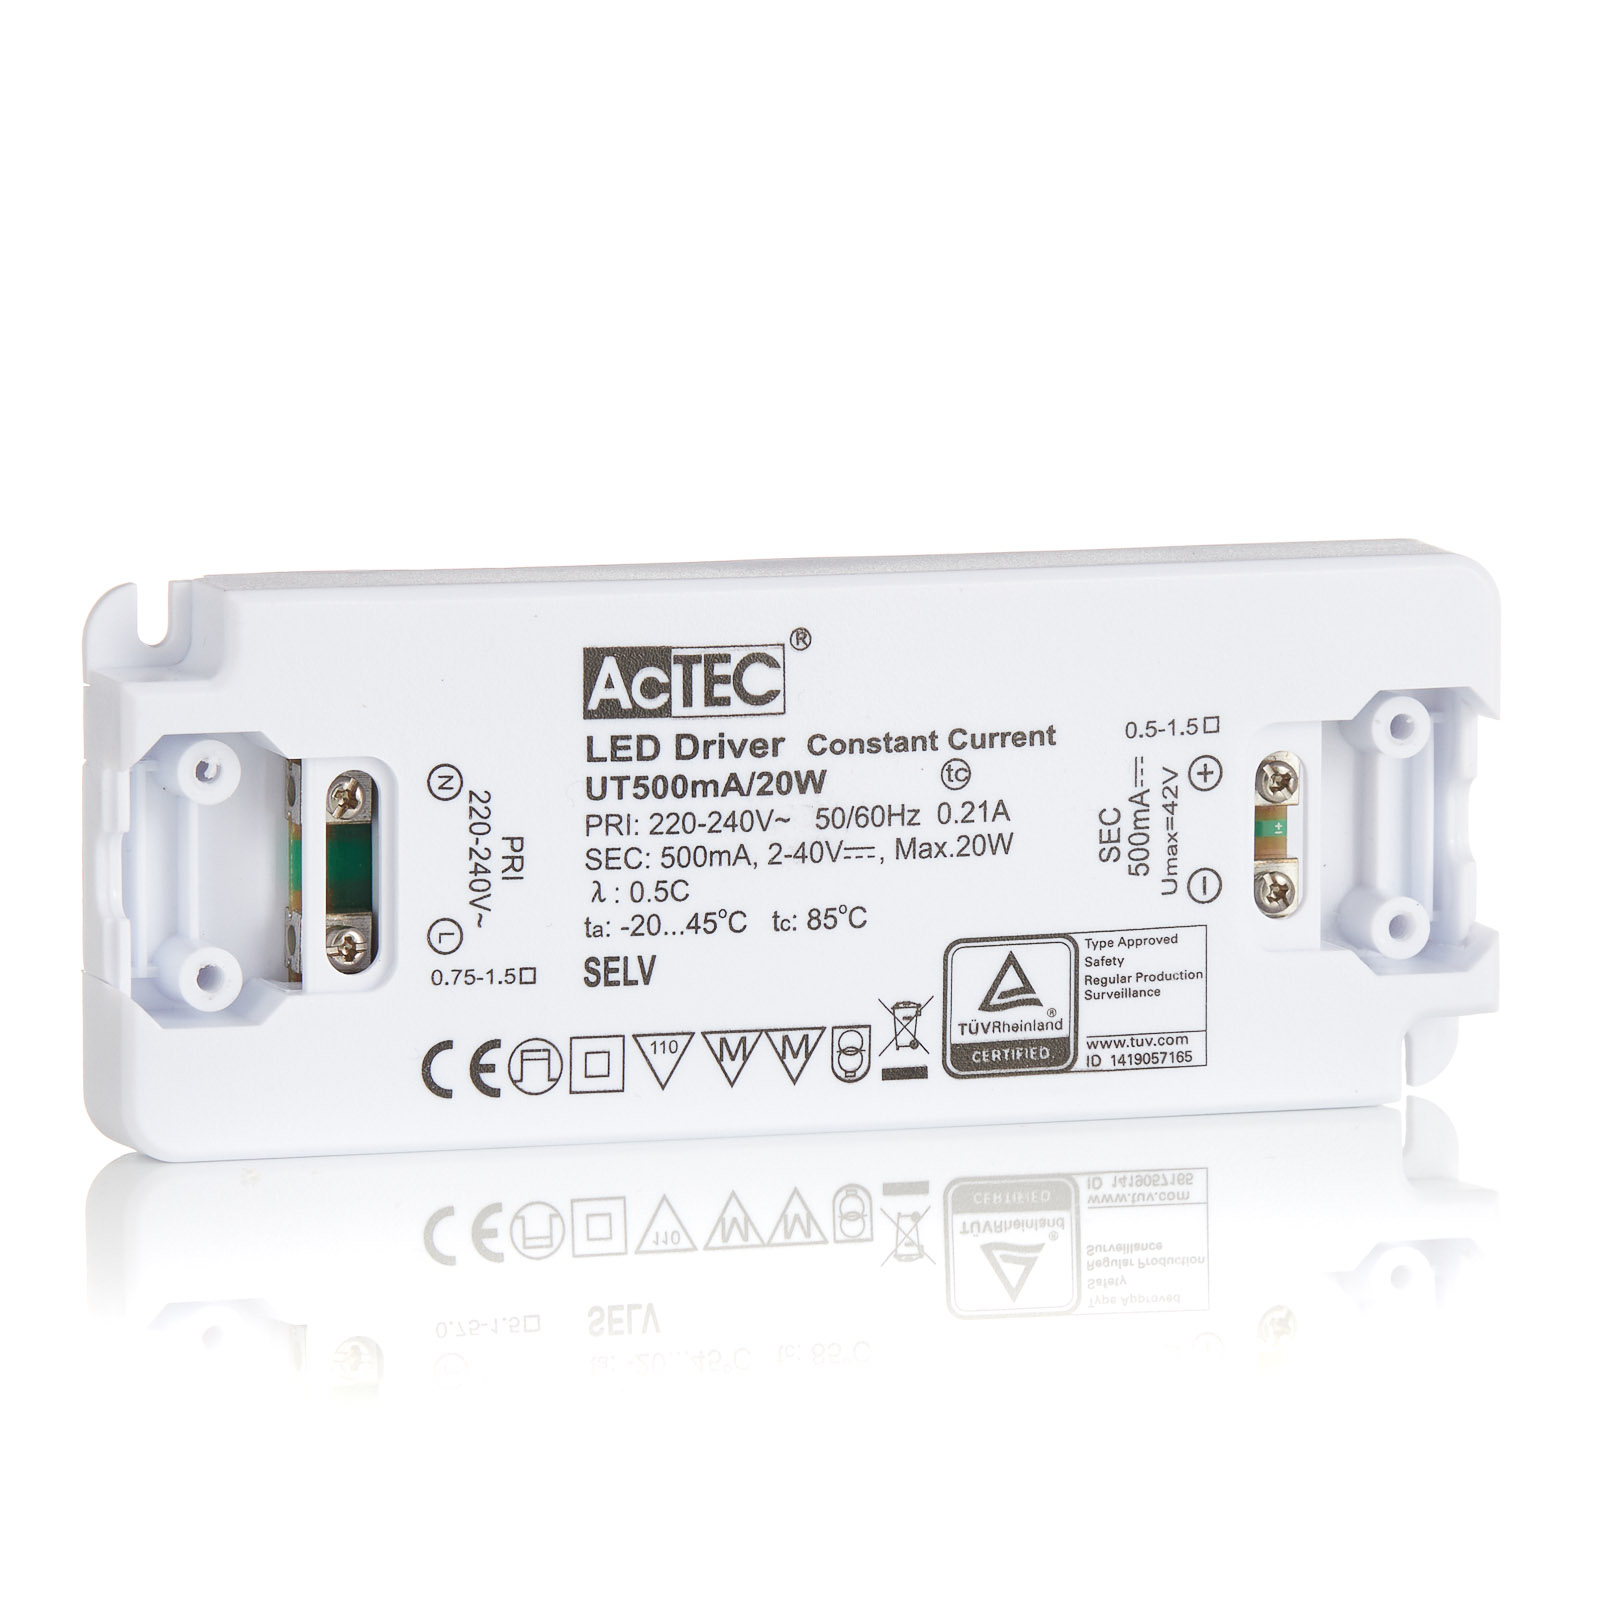 AcTEC Slim LED ovladač CC 500mA, 20W